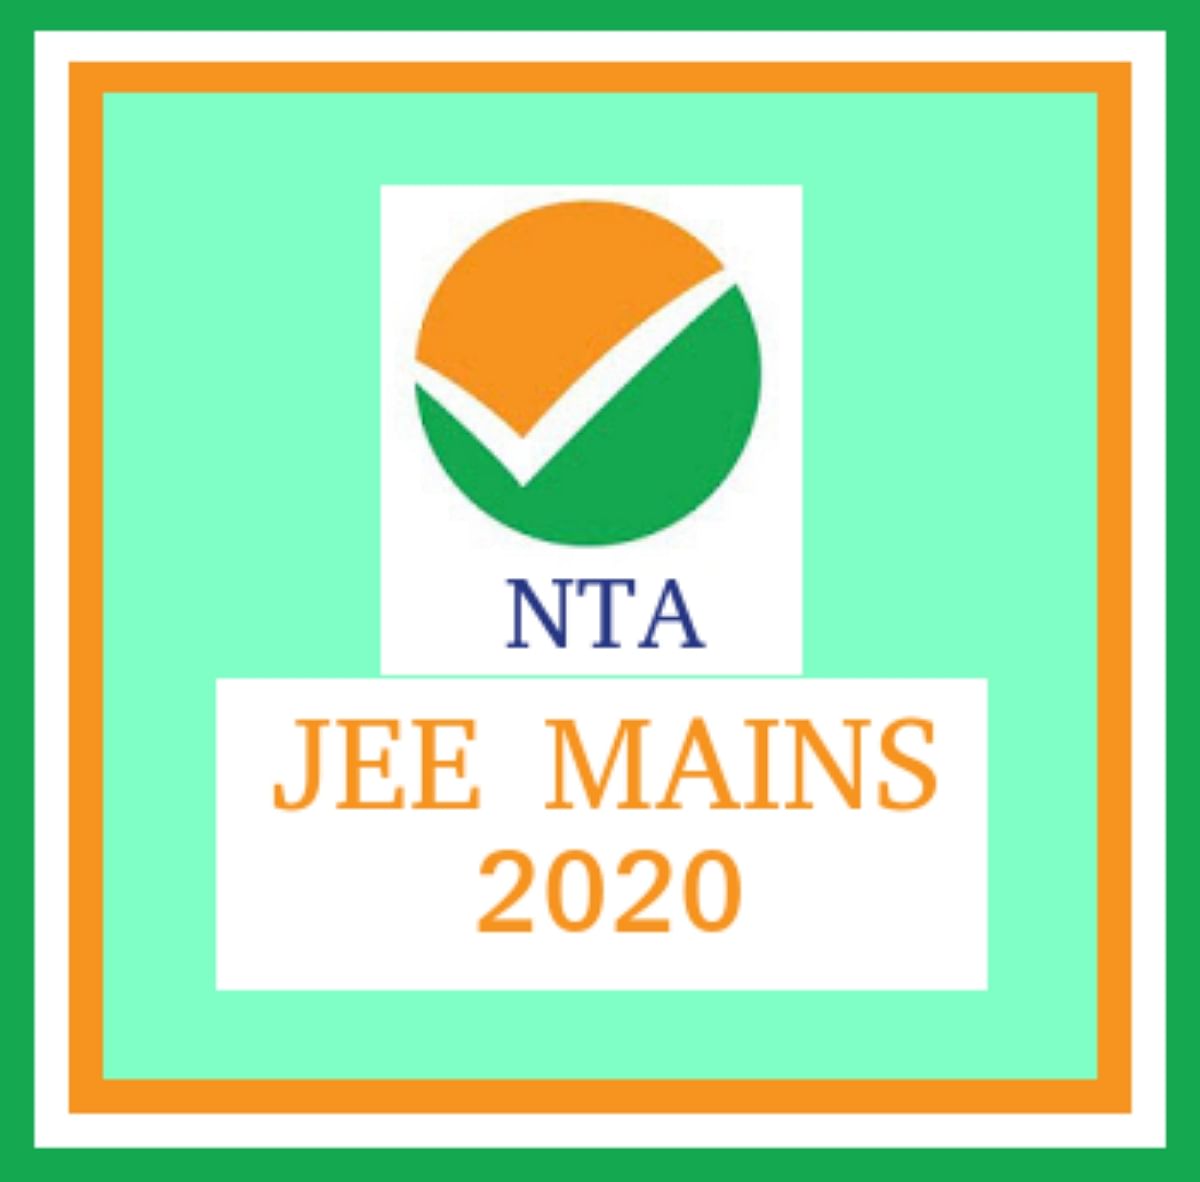 JEE Main April 2020: Exam Date Postponed, Check Latest Updates Here